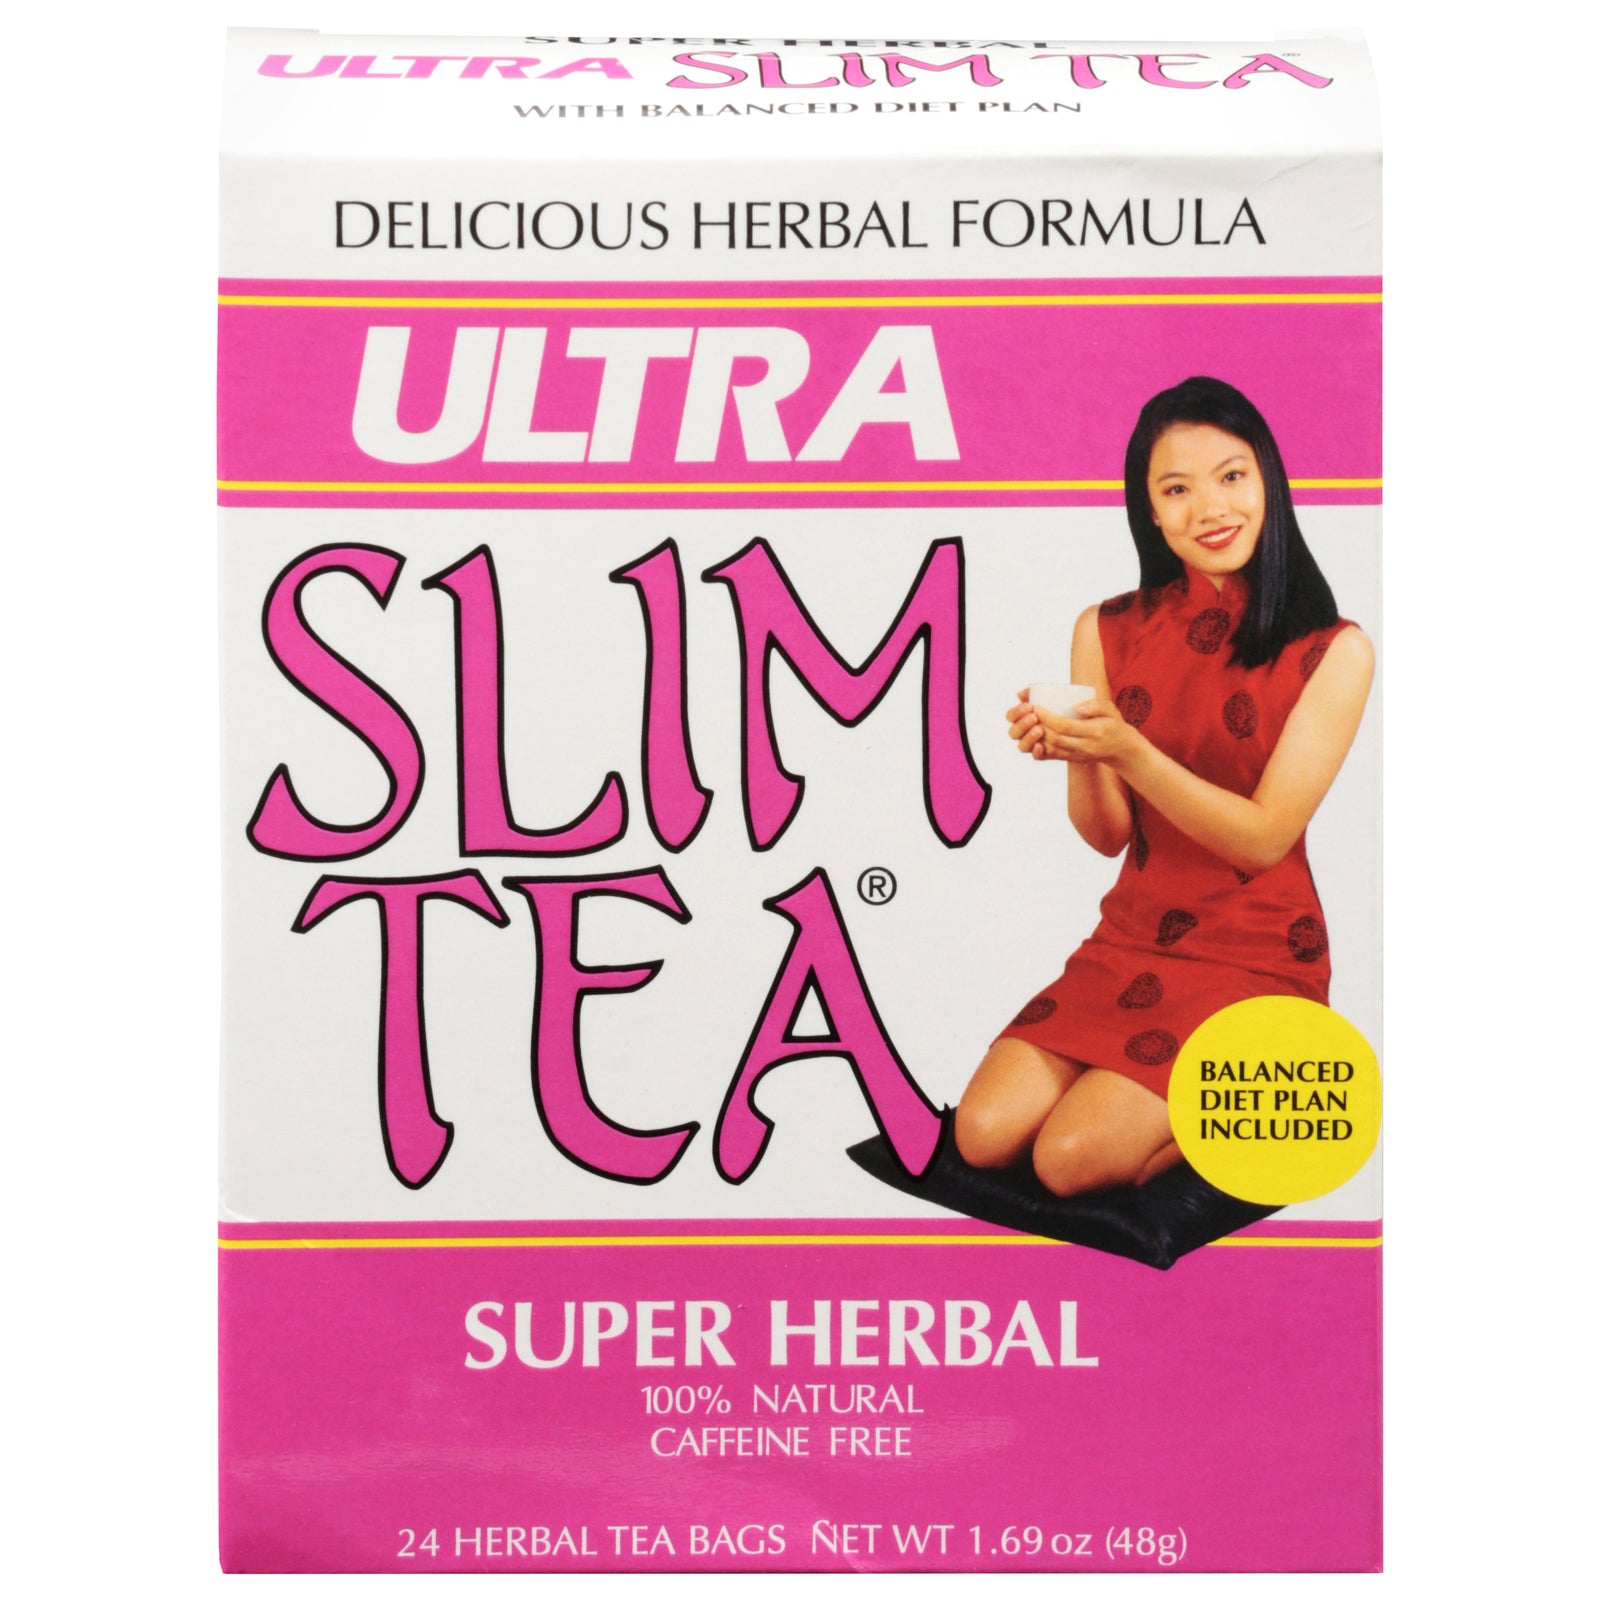 Hobe Labs Ultra Slim Tea Super Herbal - 24 Tea Bags